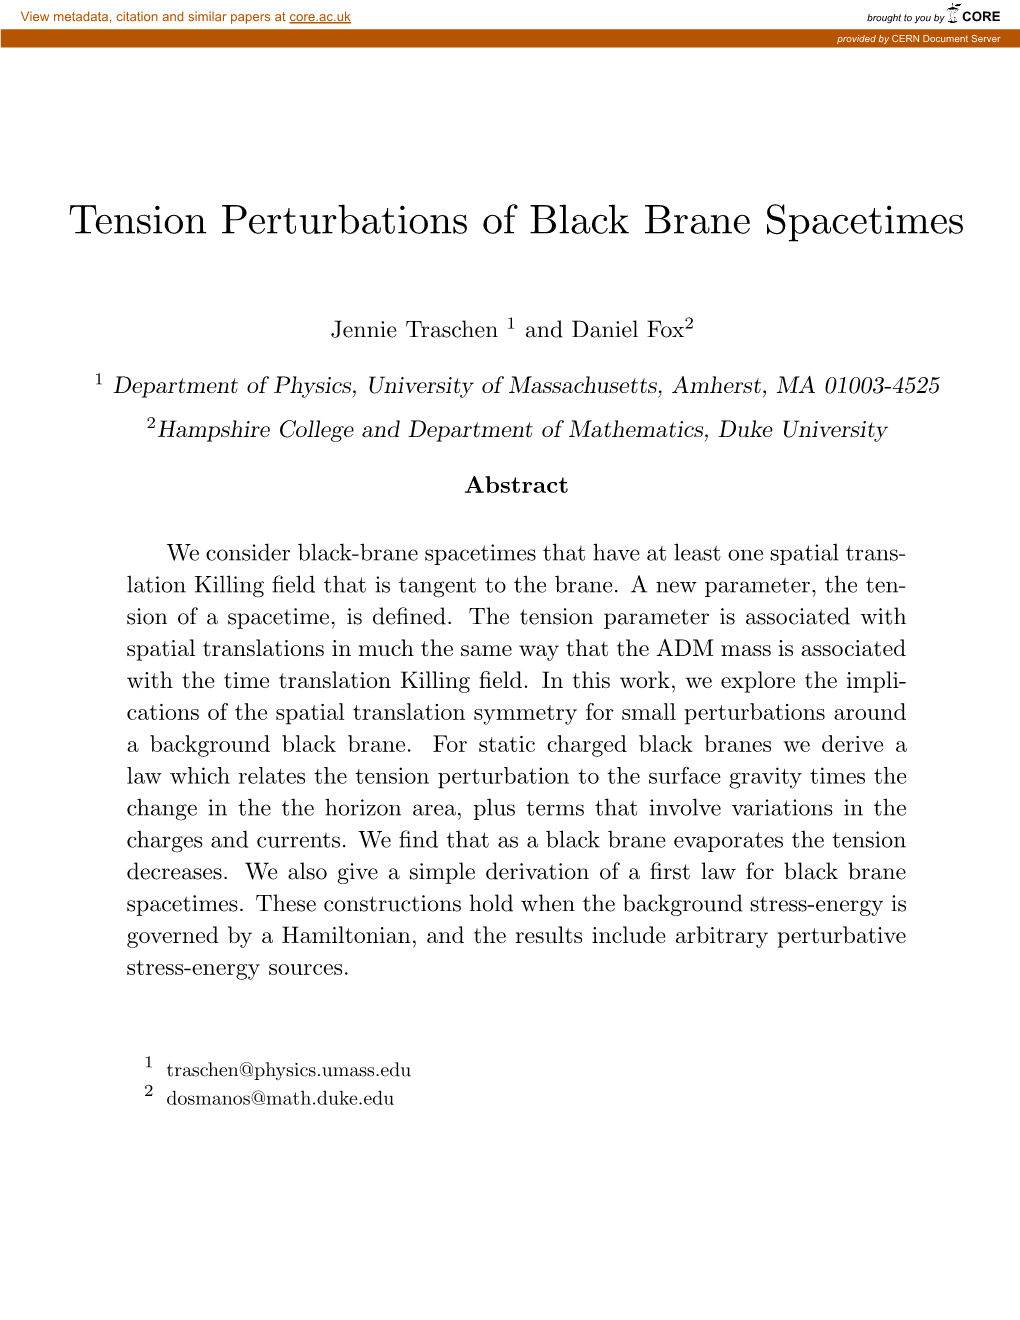 Tension Perturbations of Black Brane Spacetimes